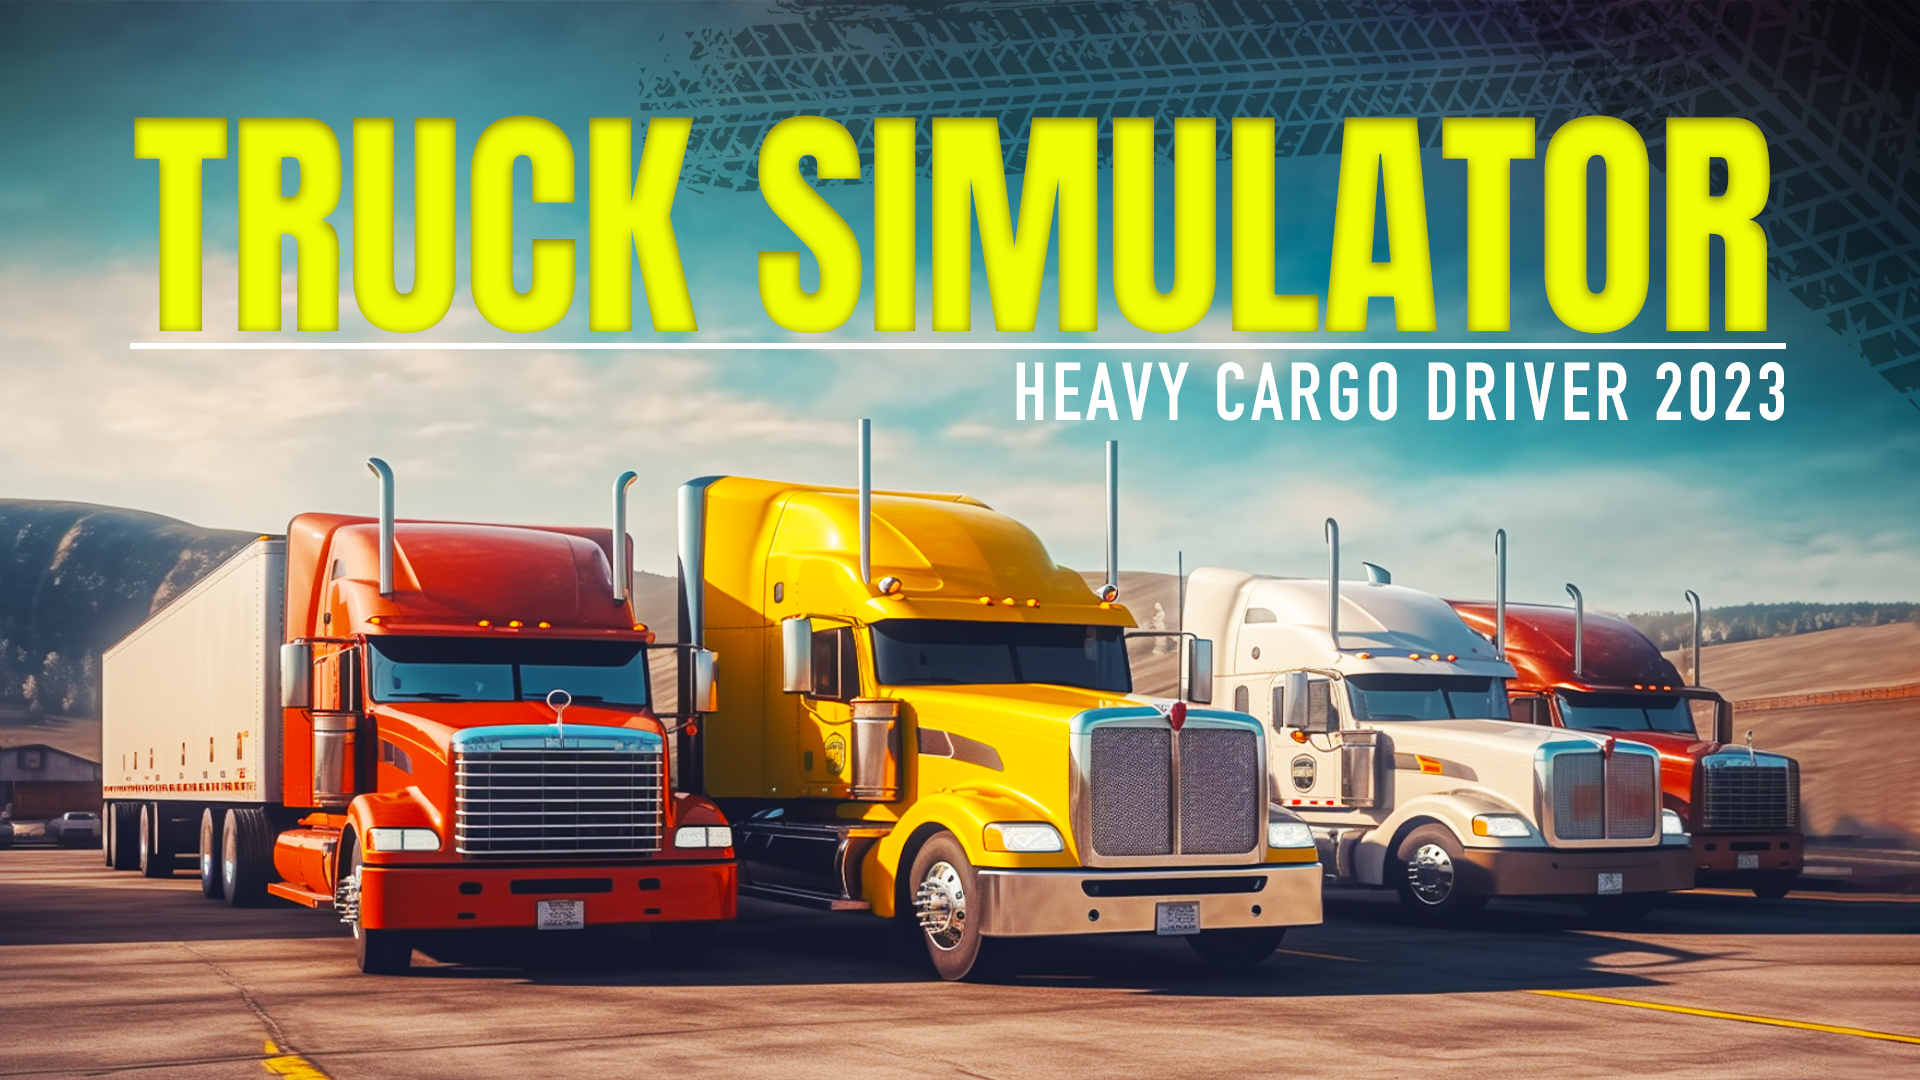 Truck Simulator - Heavy Cargo Driver 2023 - Metacritic